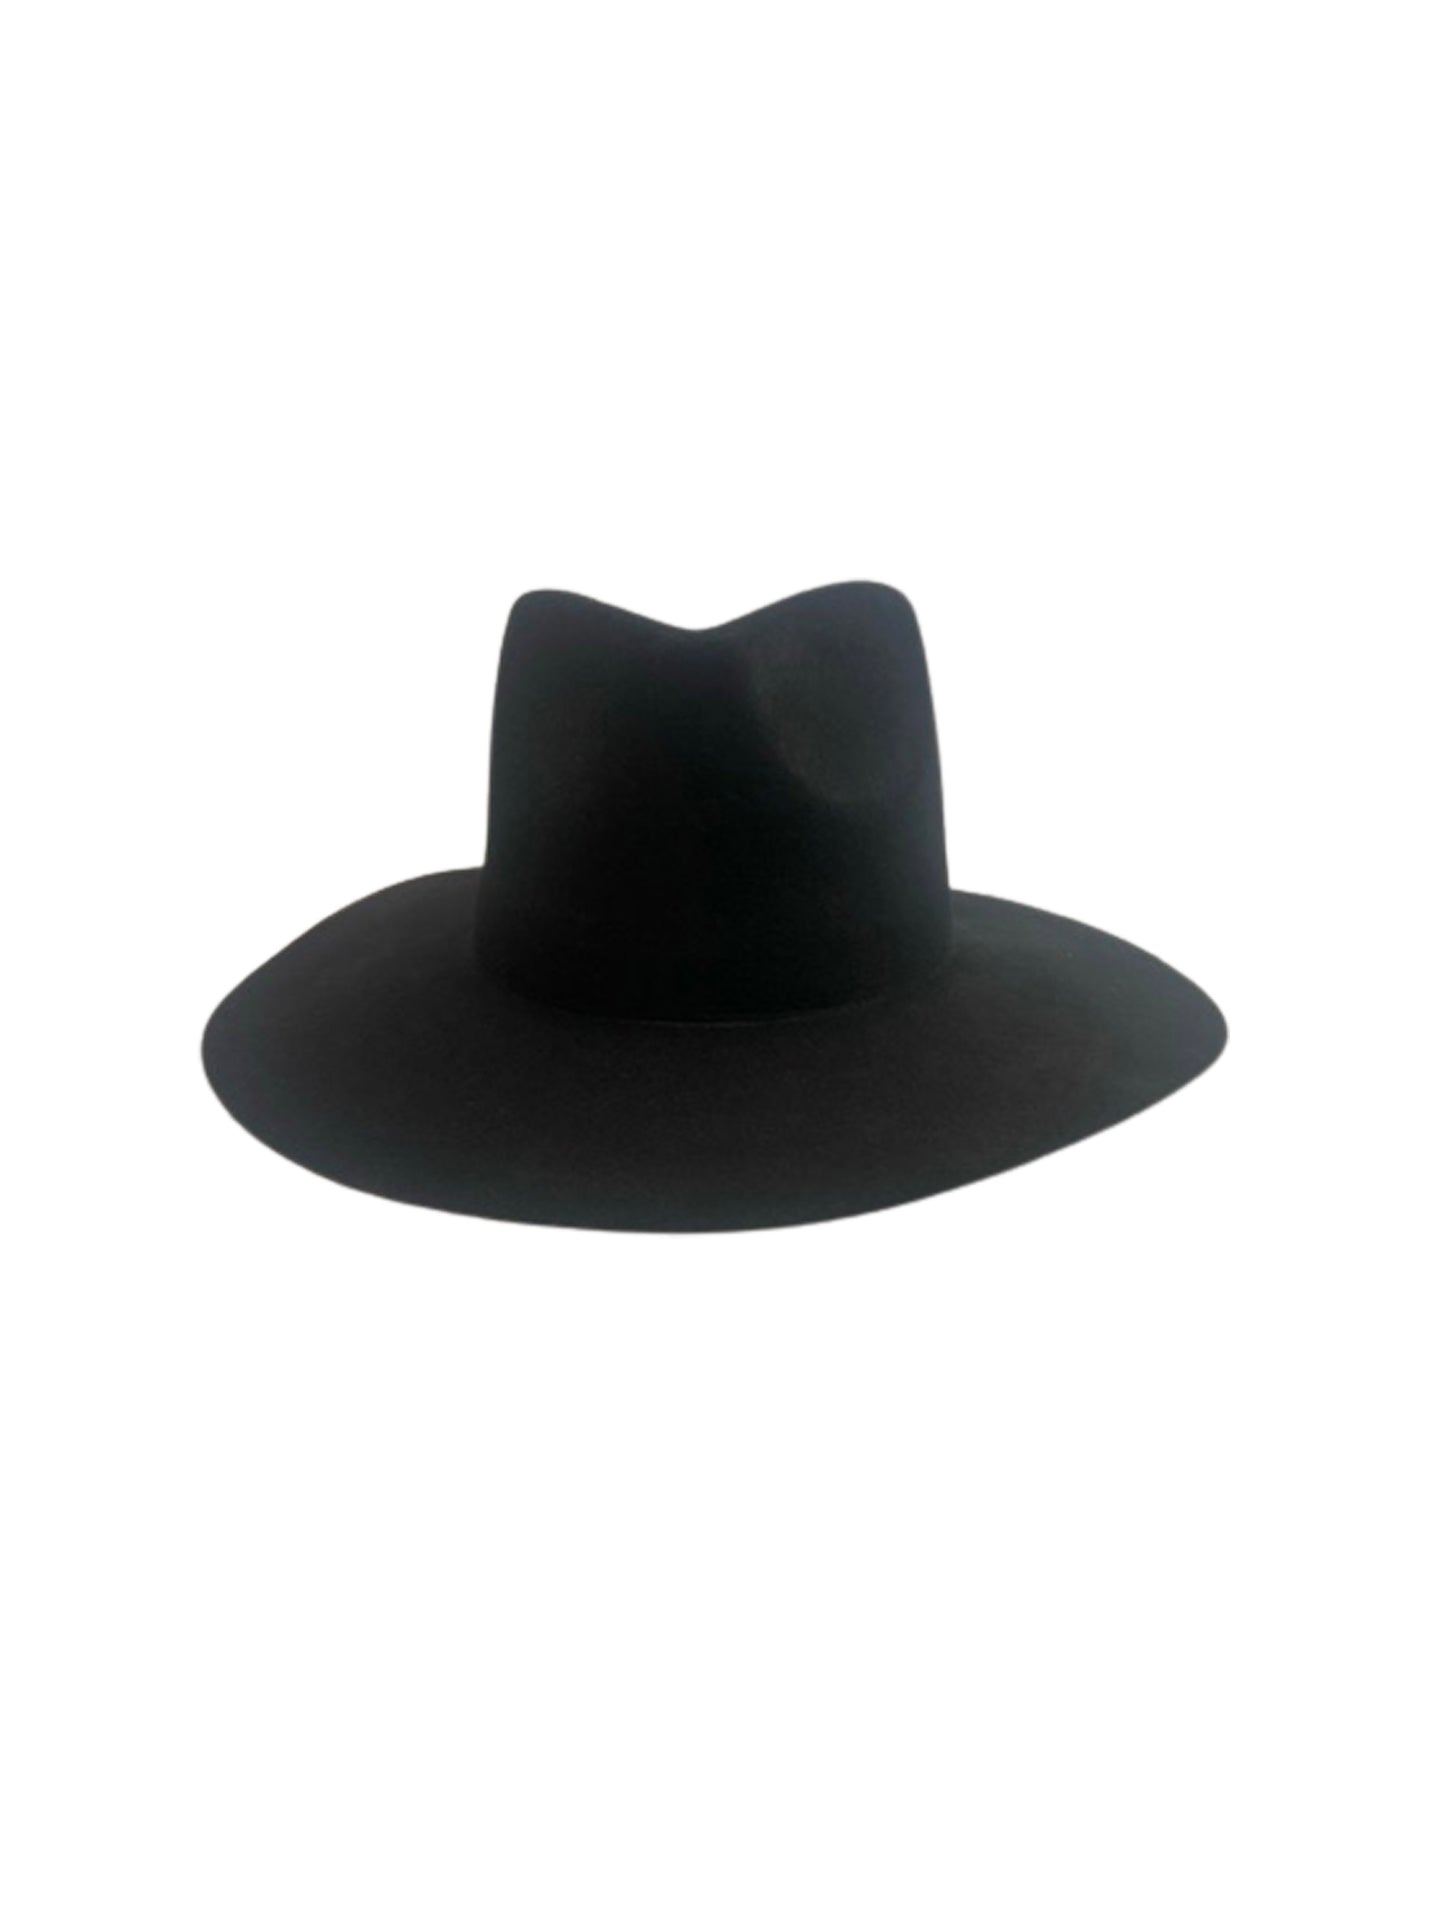 rancher hat black front